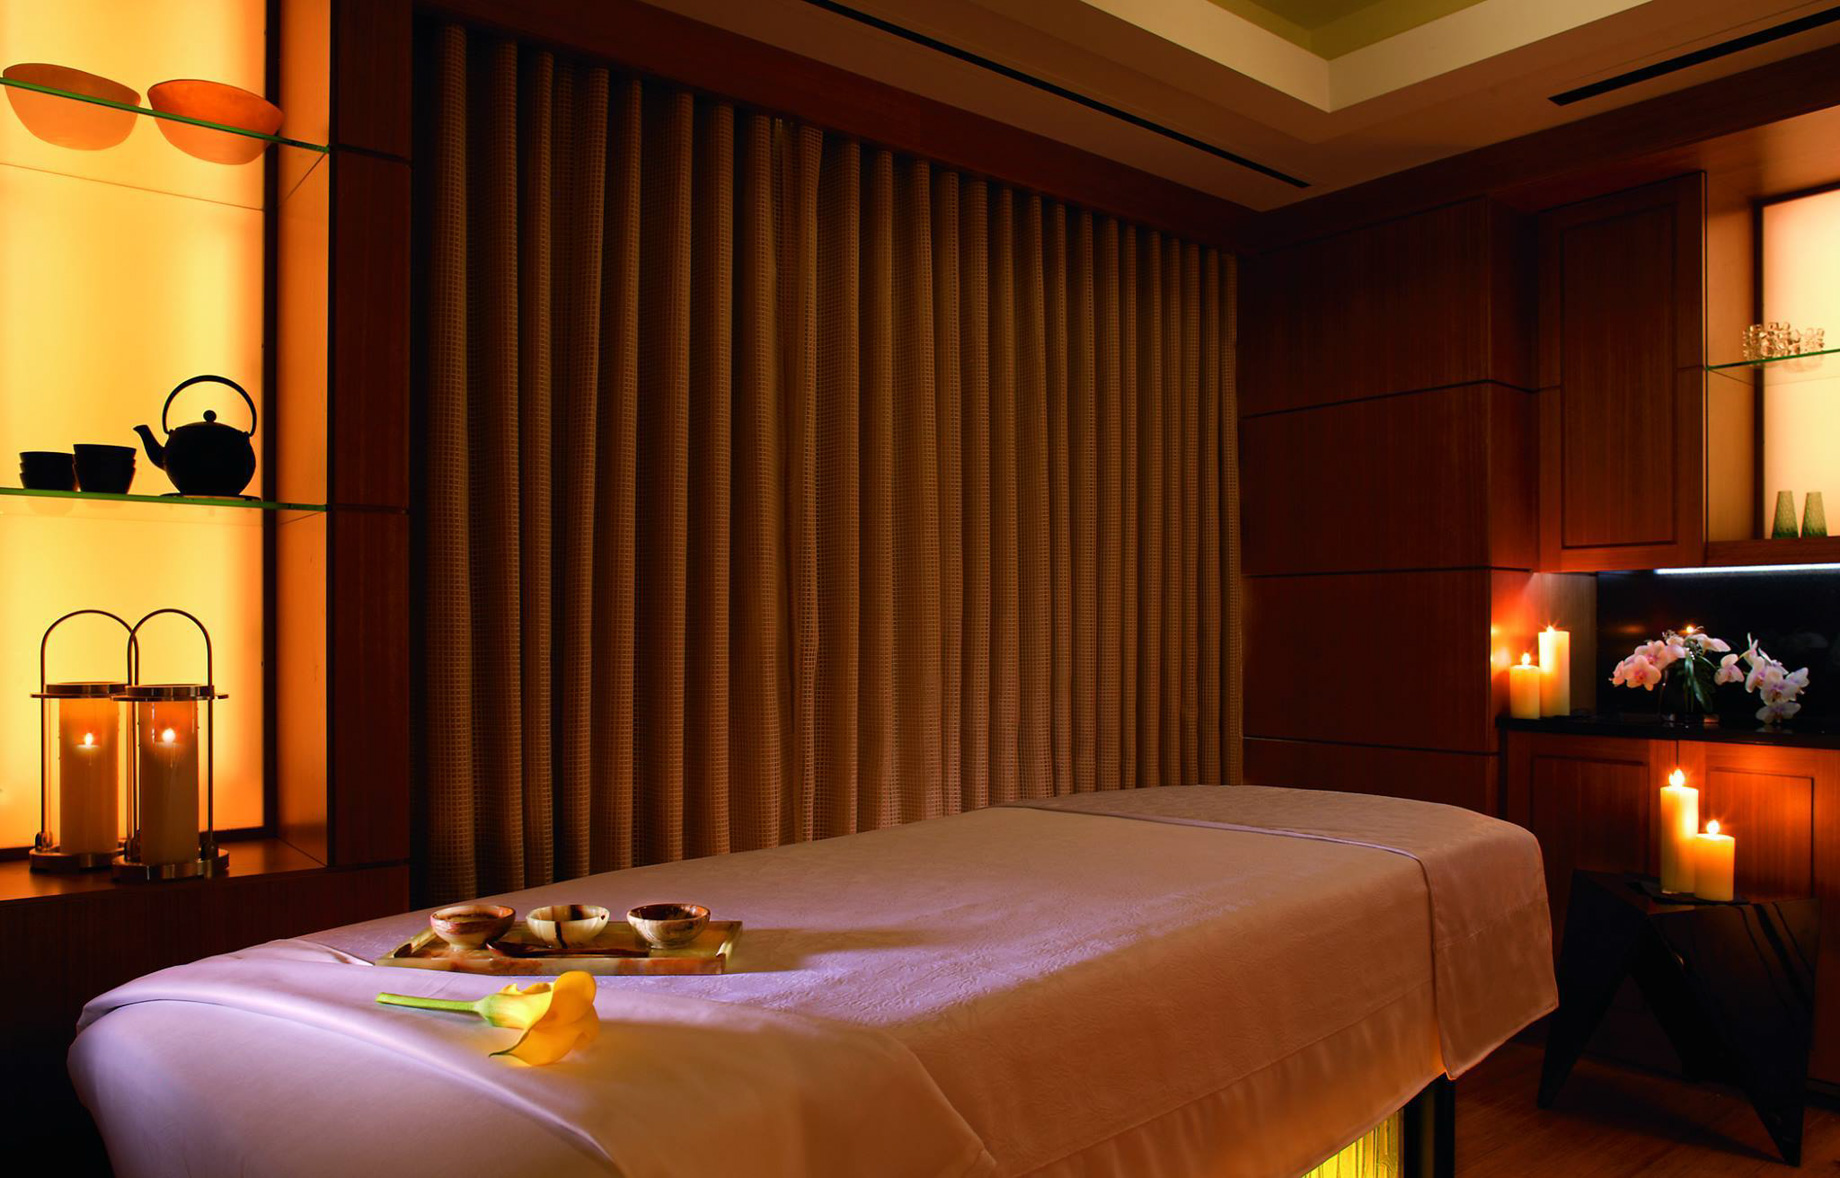 The Ritz-Carlton, Charlotte Hotel - Charlotte, NC, USA - Spa Treatment Room